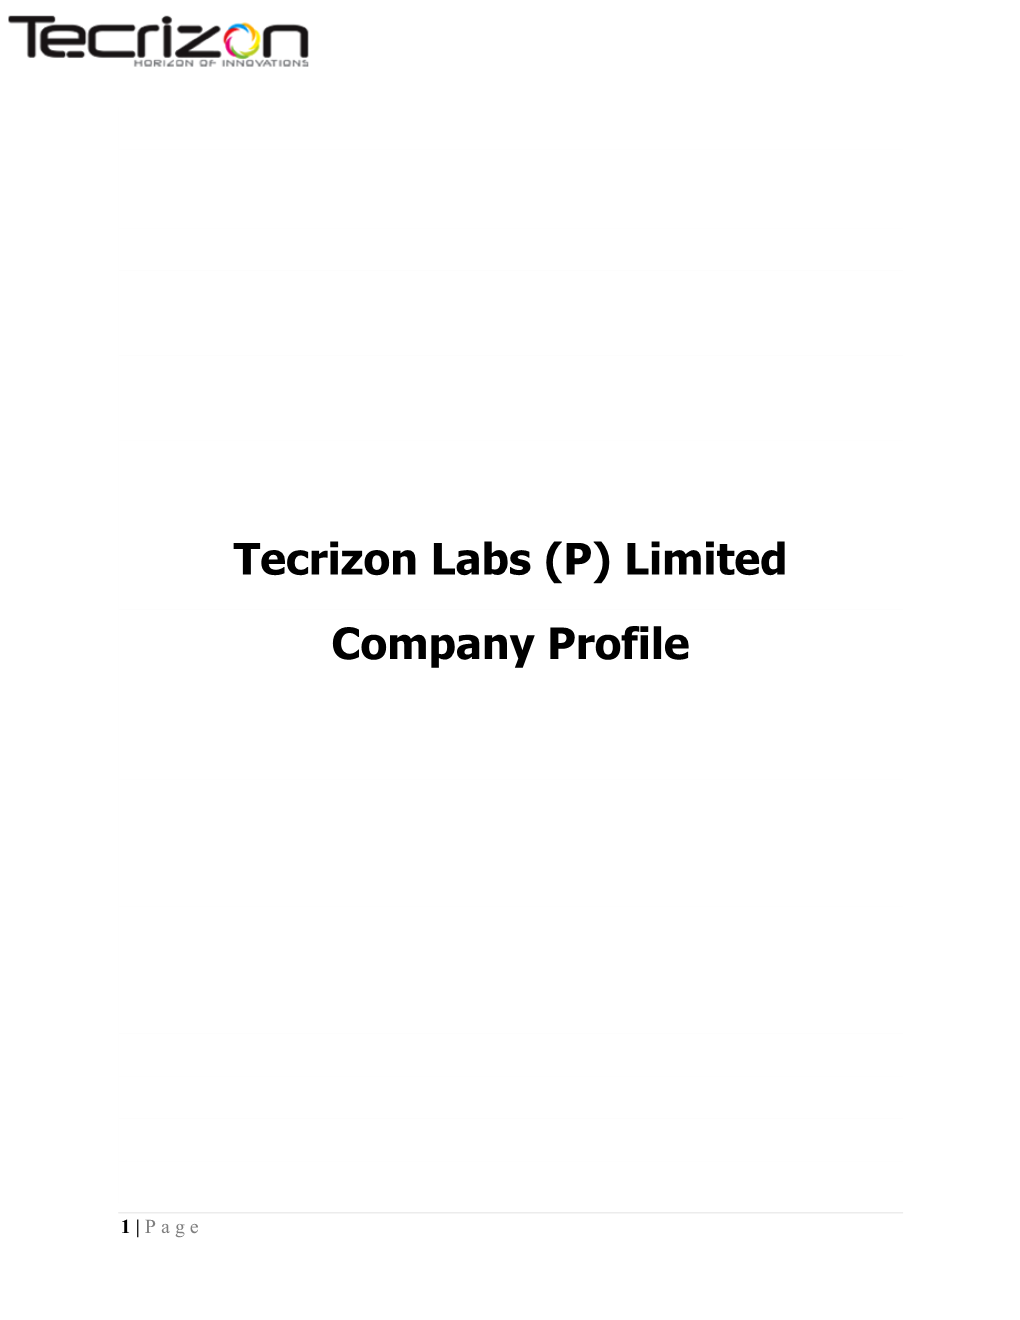 Tecrizon Labs (P) Limited Company Profile